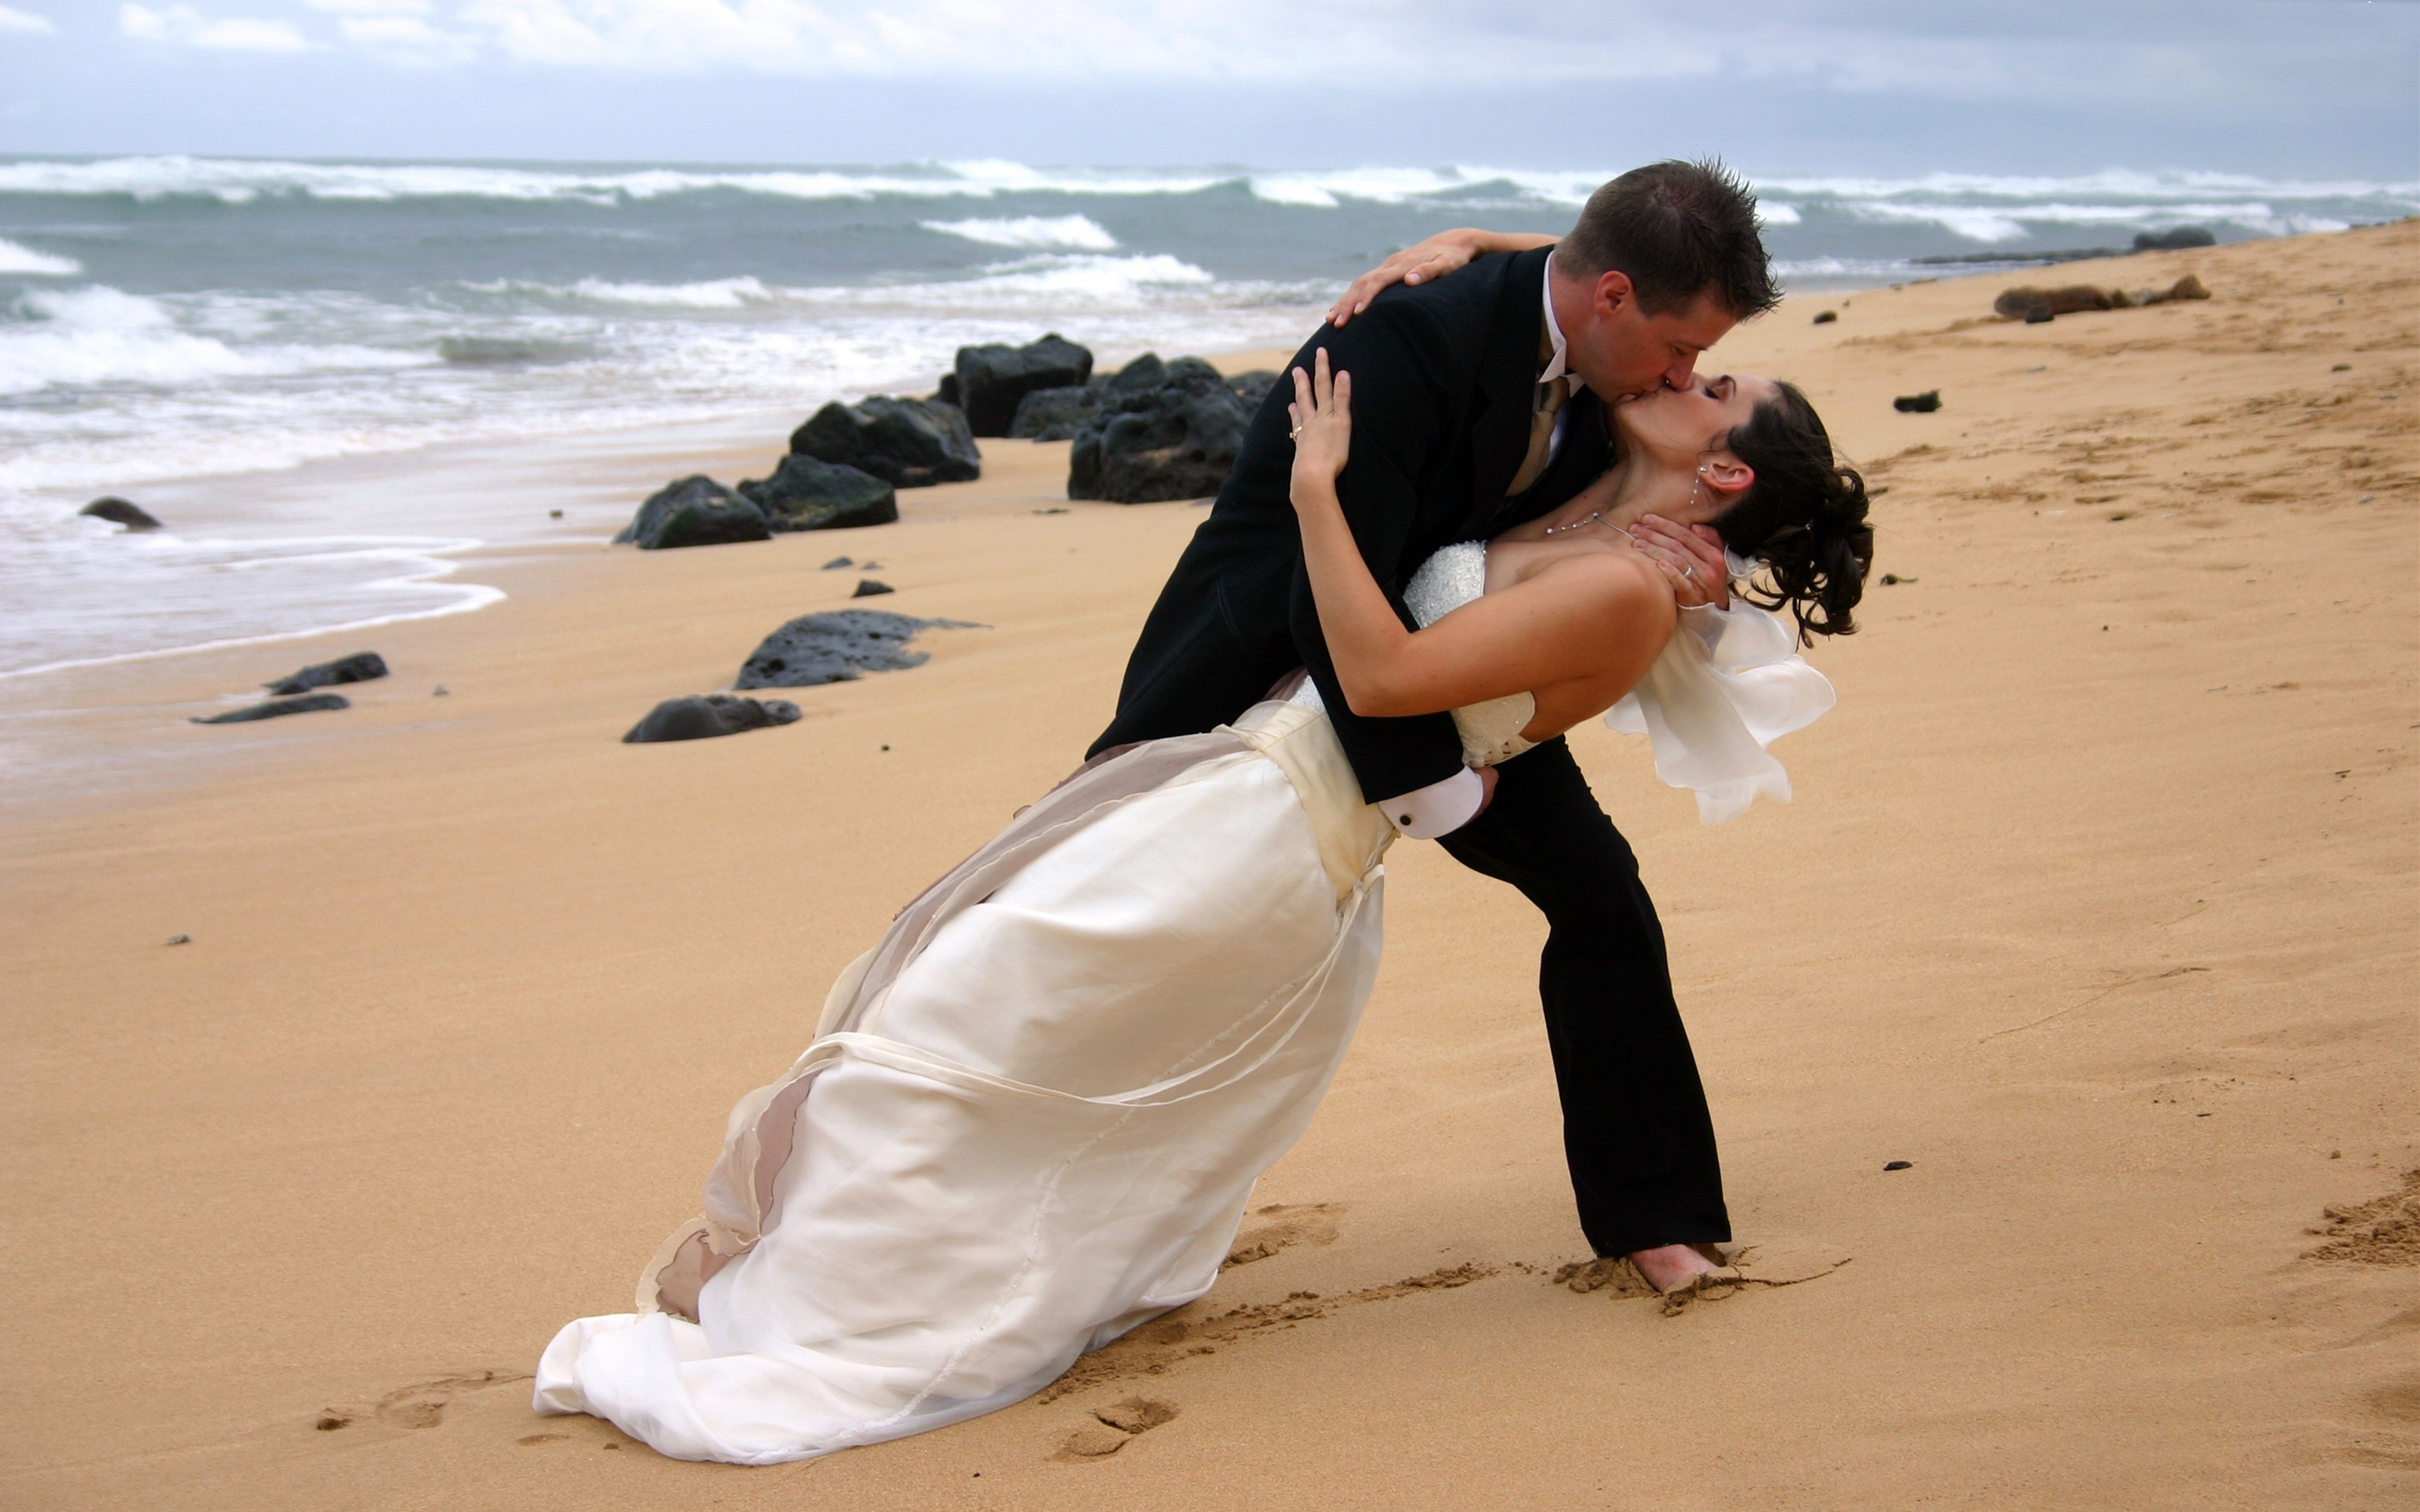 Love-beach-Romance Couple-wedding-girl-boy-kissing-HD Wallpaper-3072x1920 :  